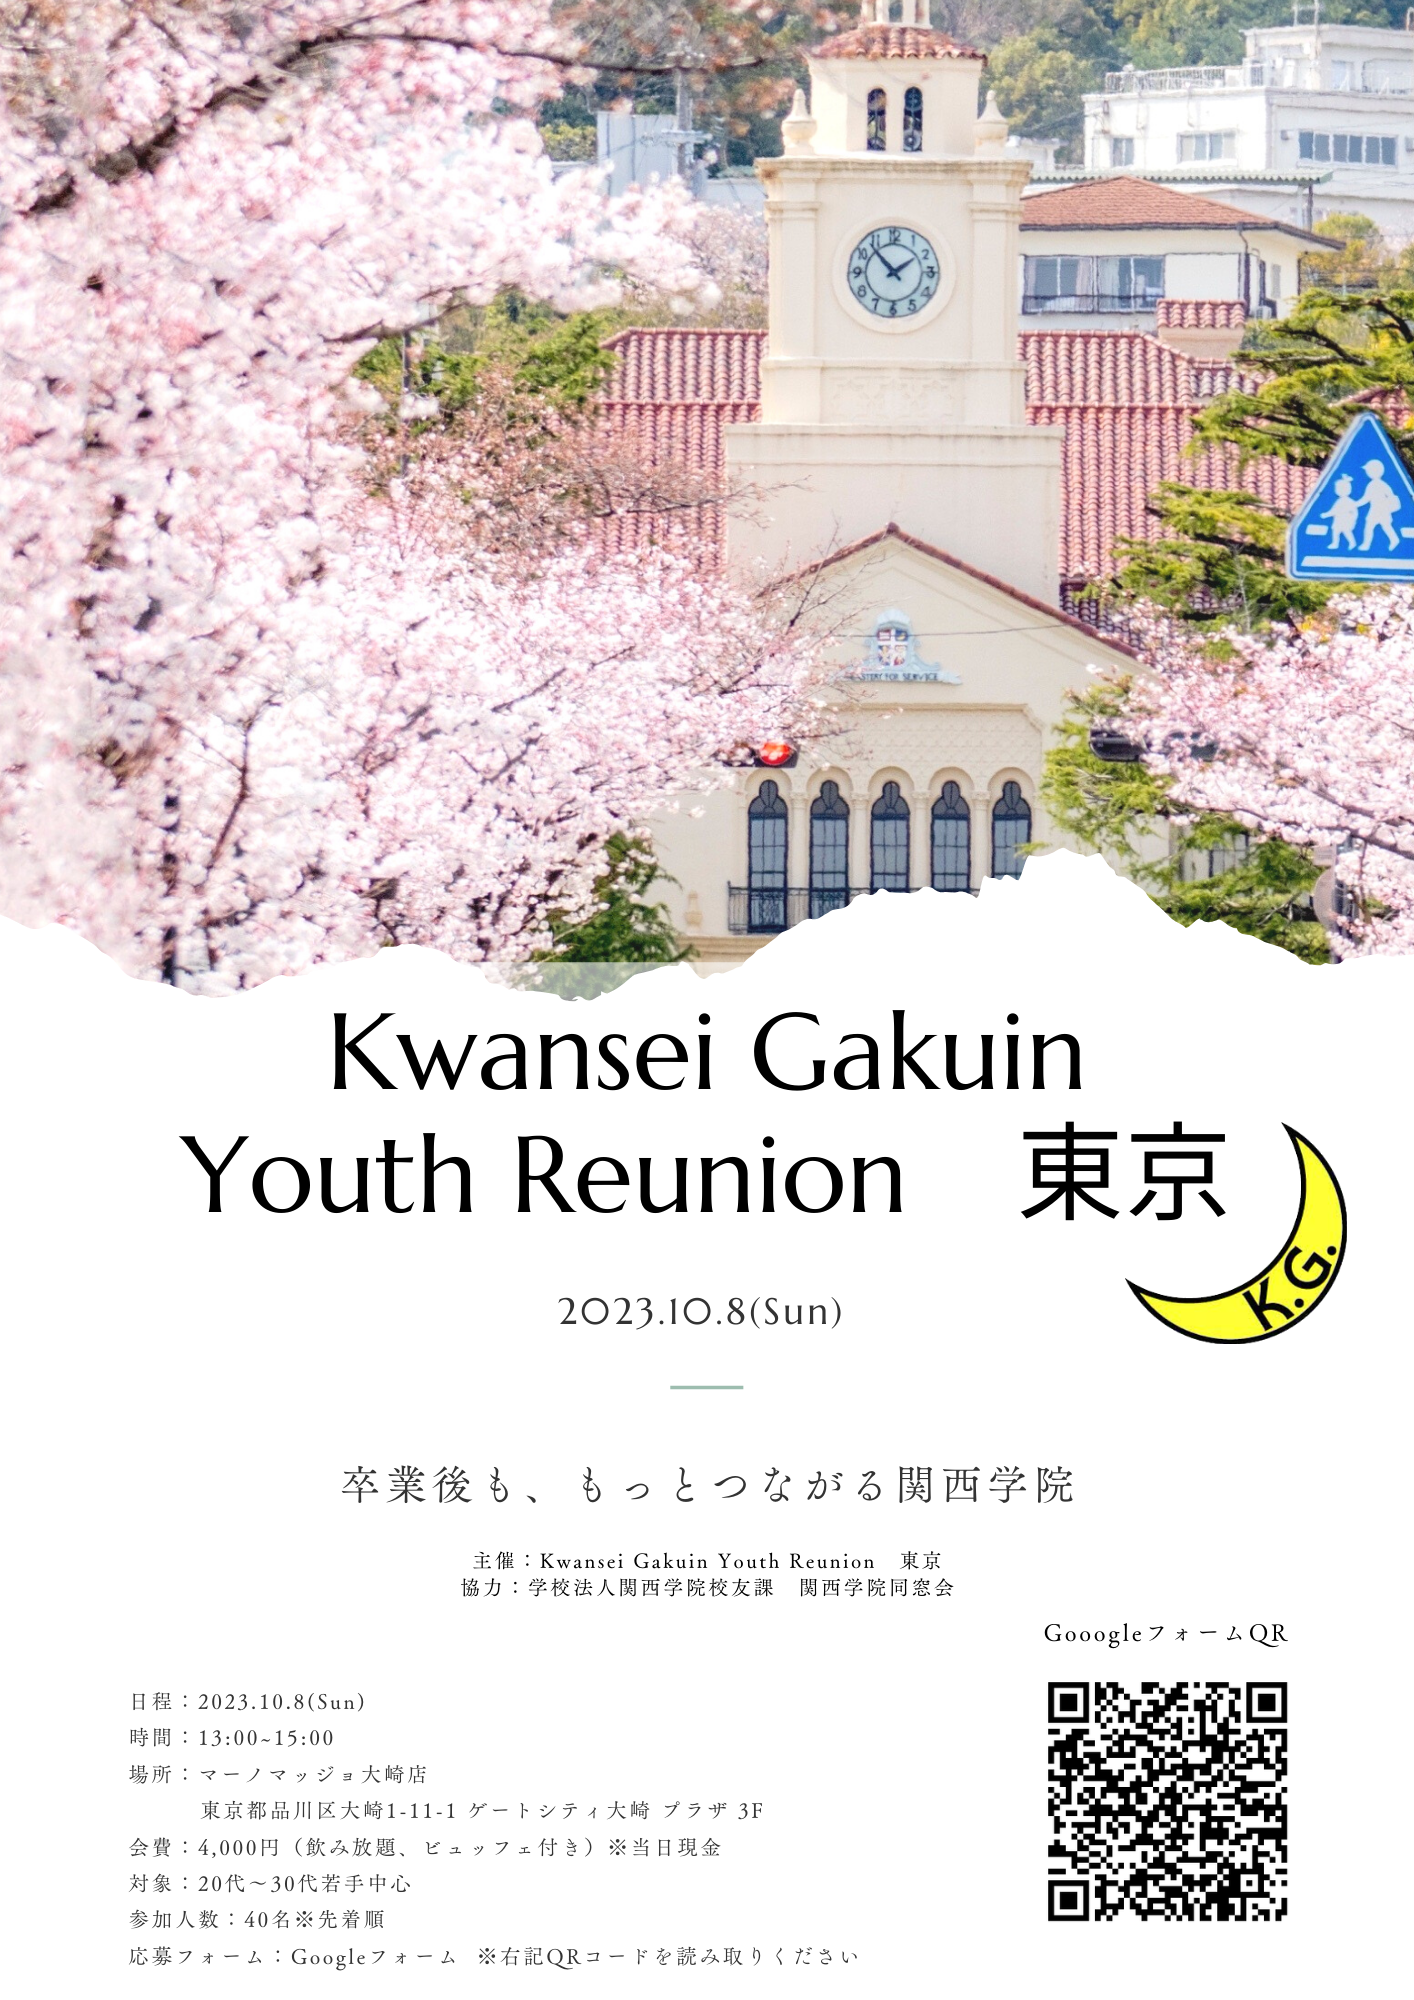 「Youth Reunion東京」のご案内です♪